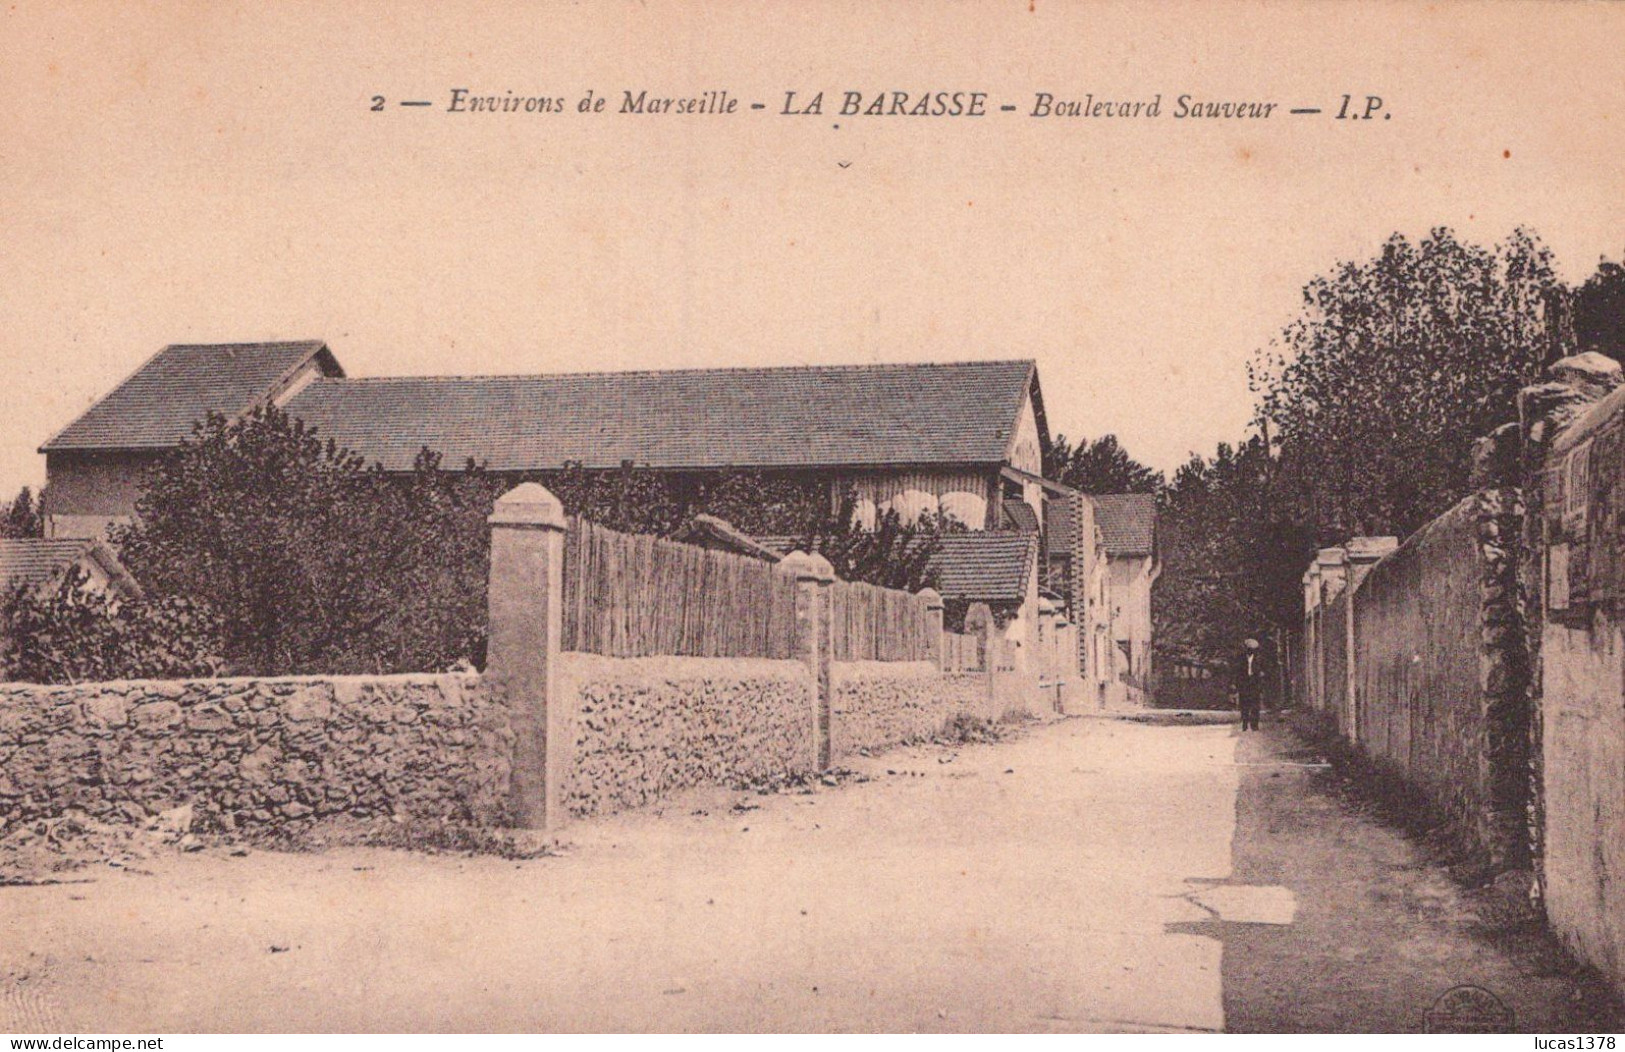 13 / MARSEILLE / LA BARASSE / BOULEVARD SAUVEUR / IP 2 - Saint Marcel, La Barasse, St Menet